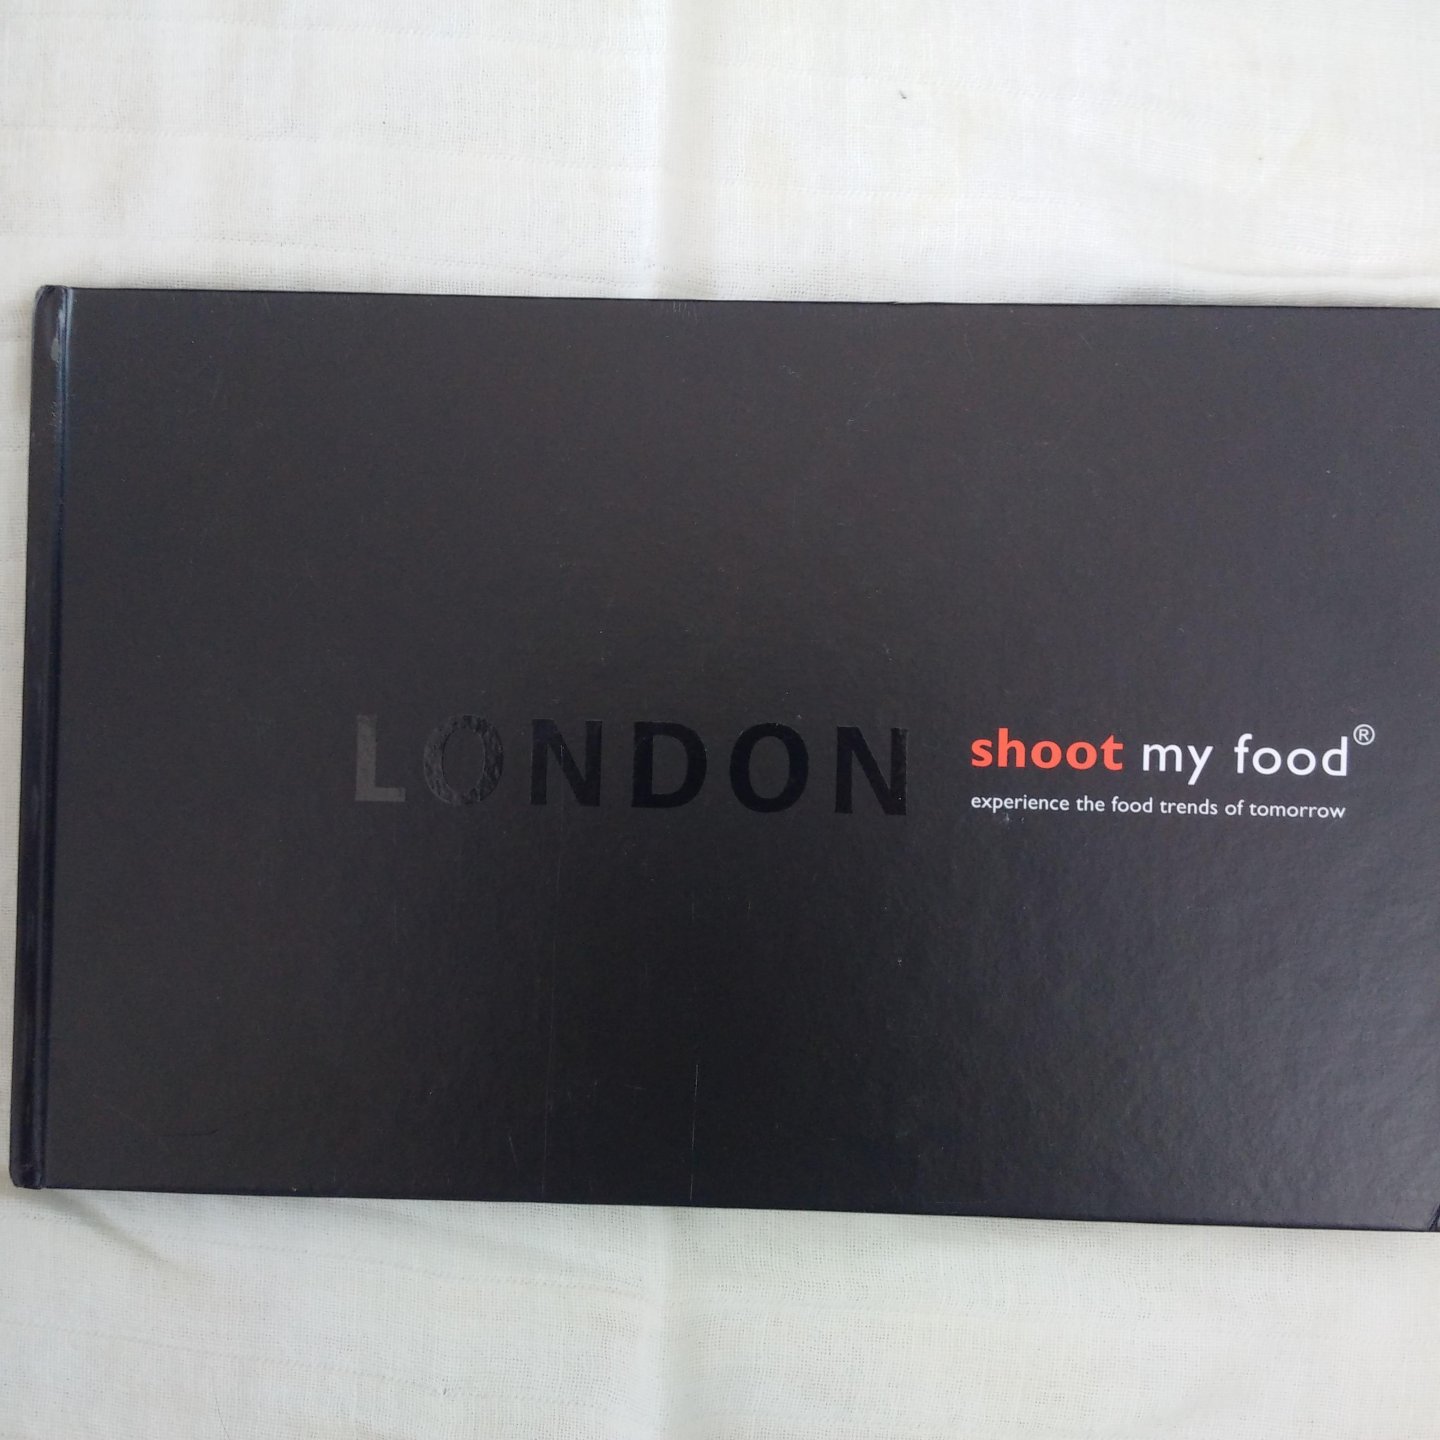 Boer, Arjan de - London shoot my food, experience the food trends of tomorrow